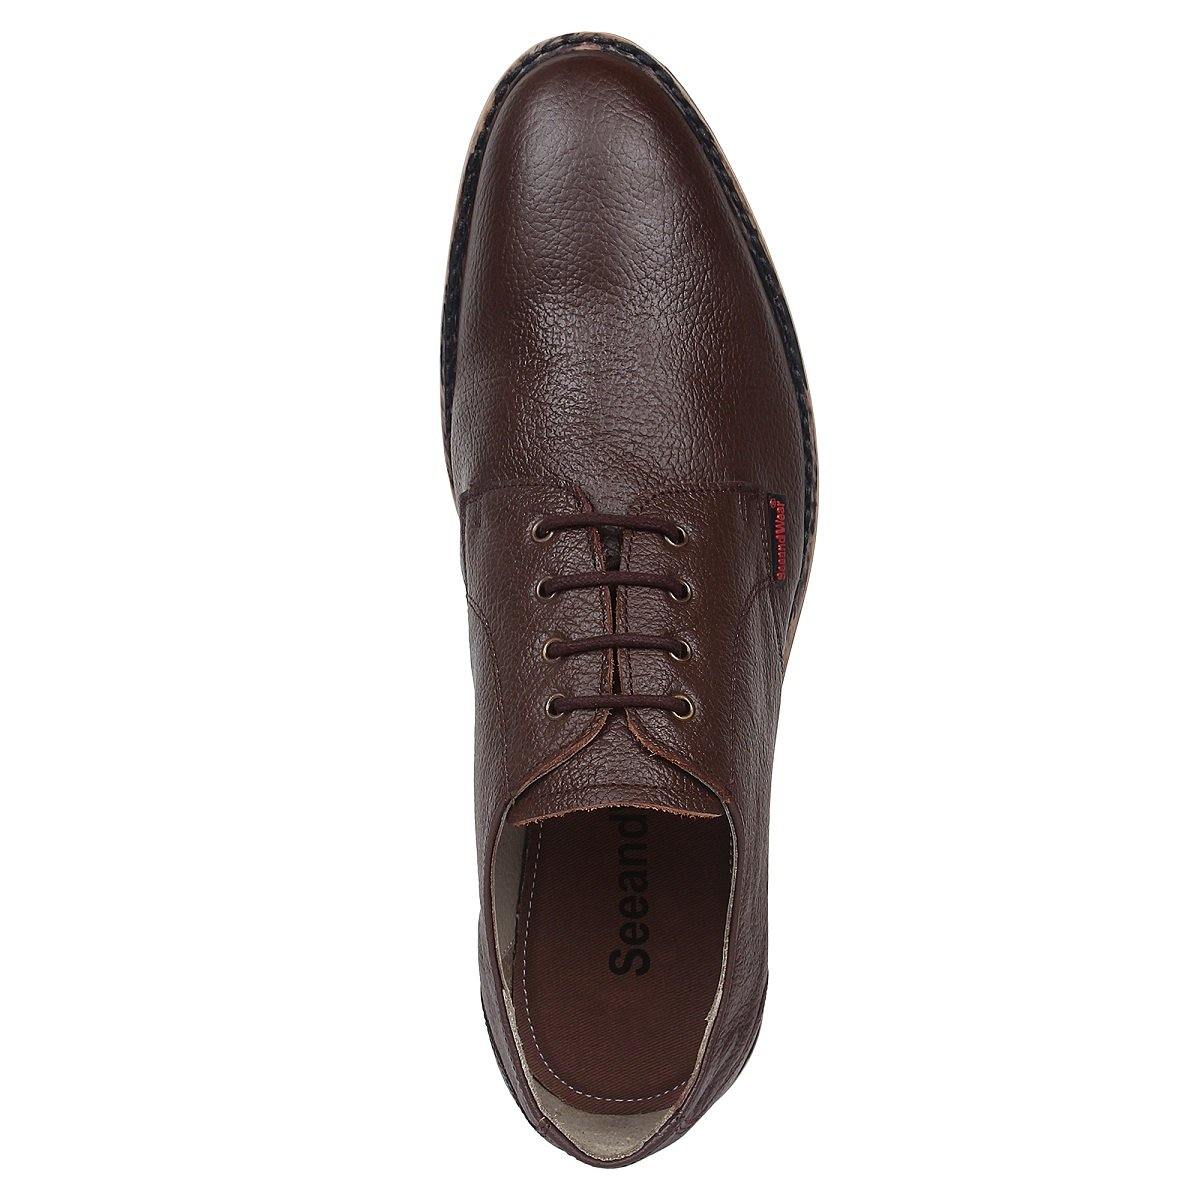 Formal Shoes for Men - SeeandWear